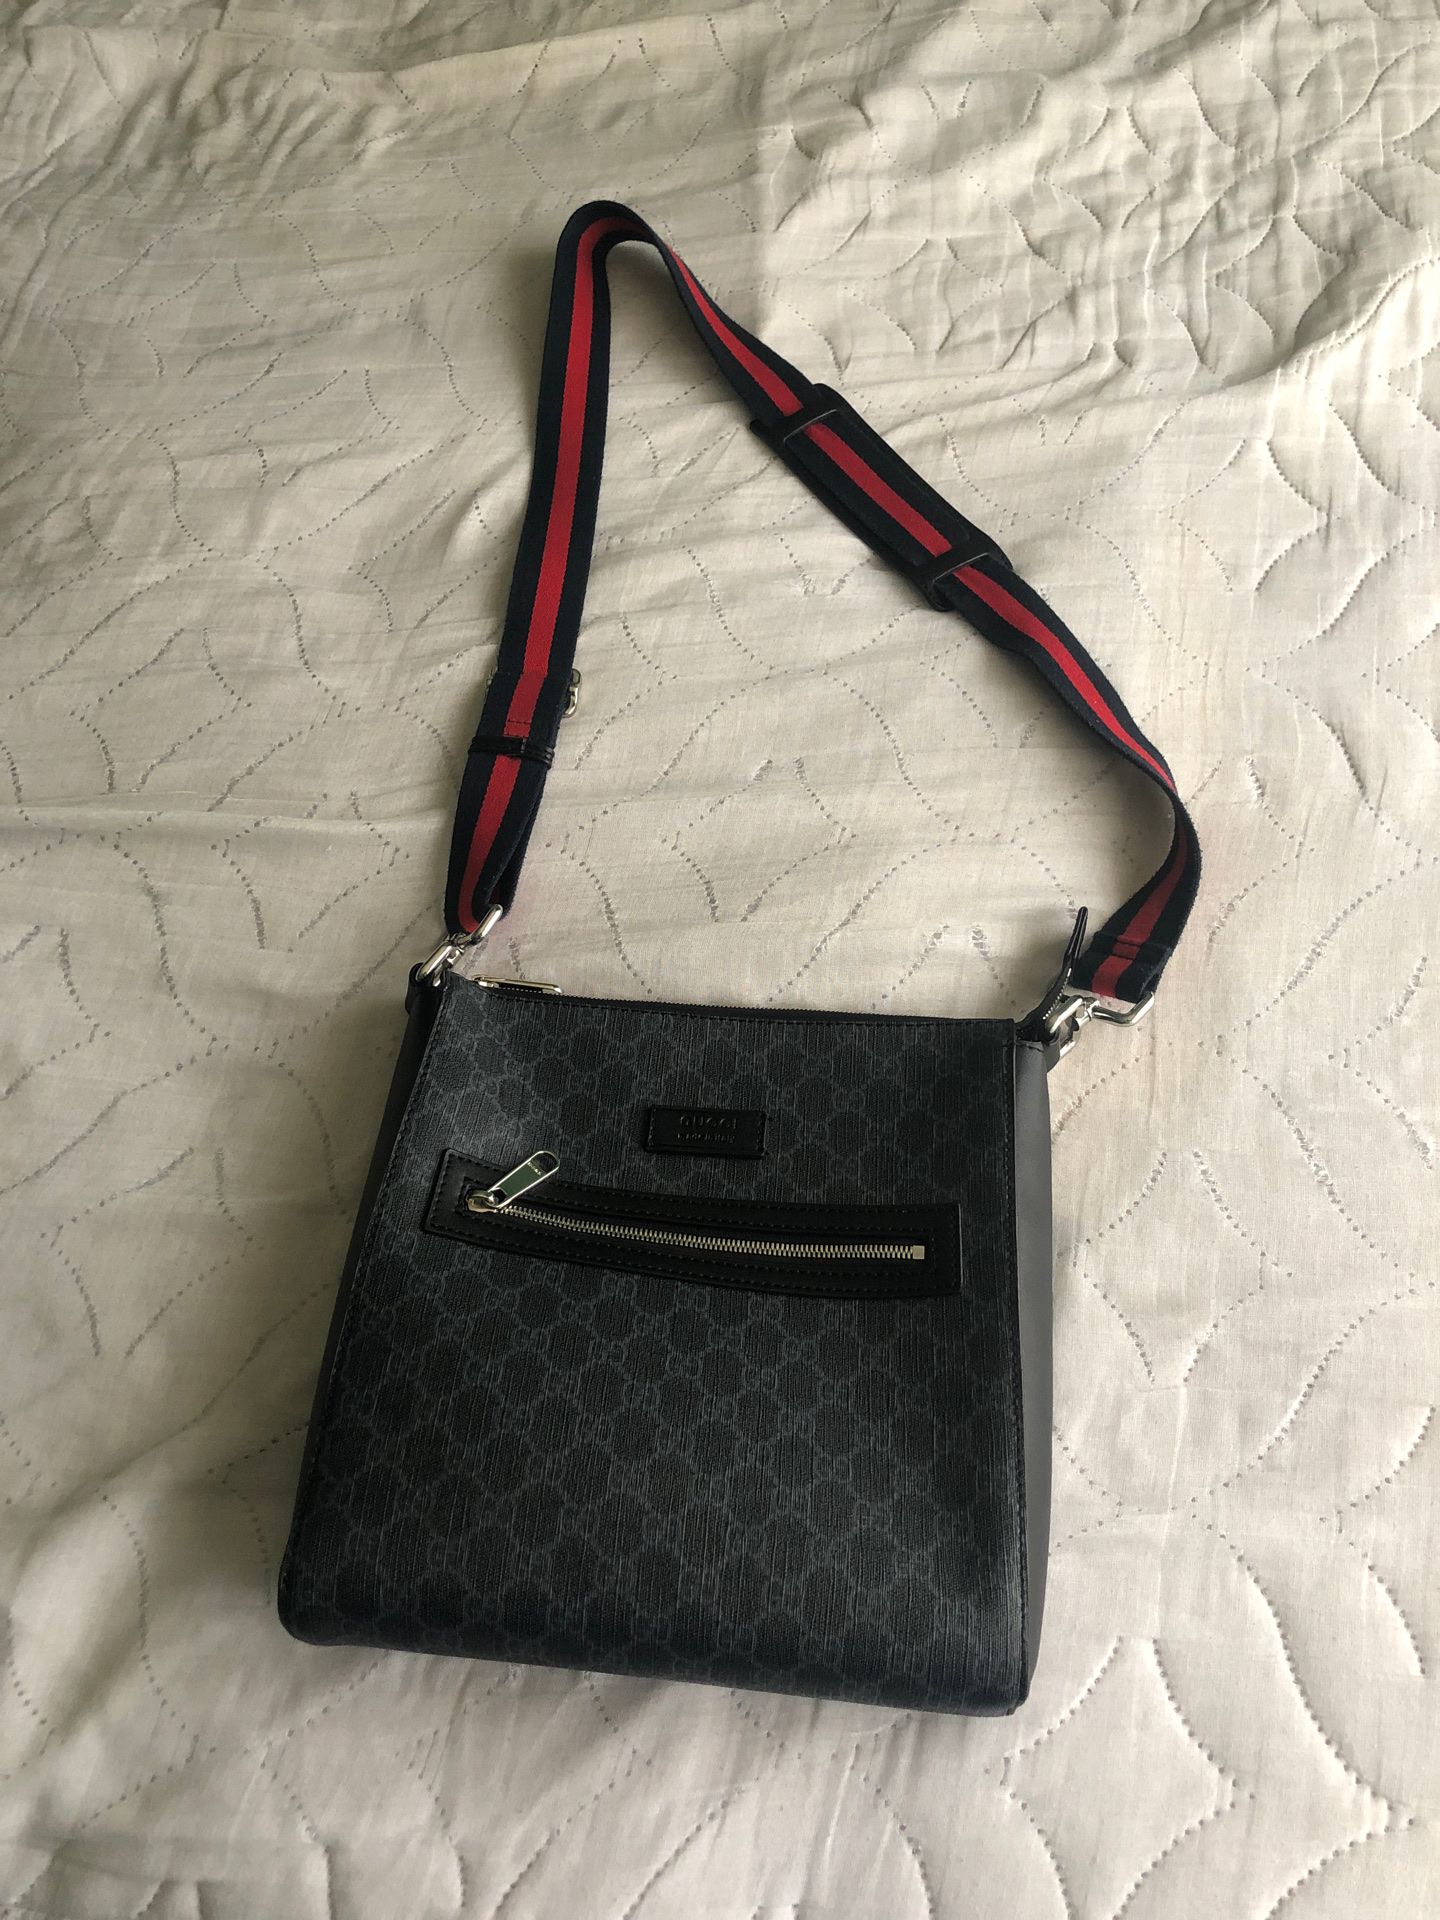 Brand new Gucci messenger bag